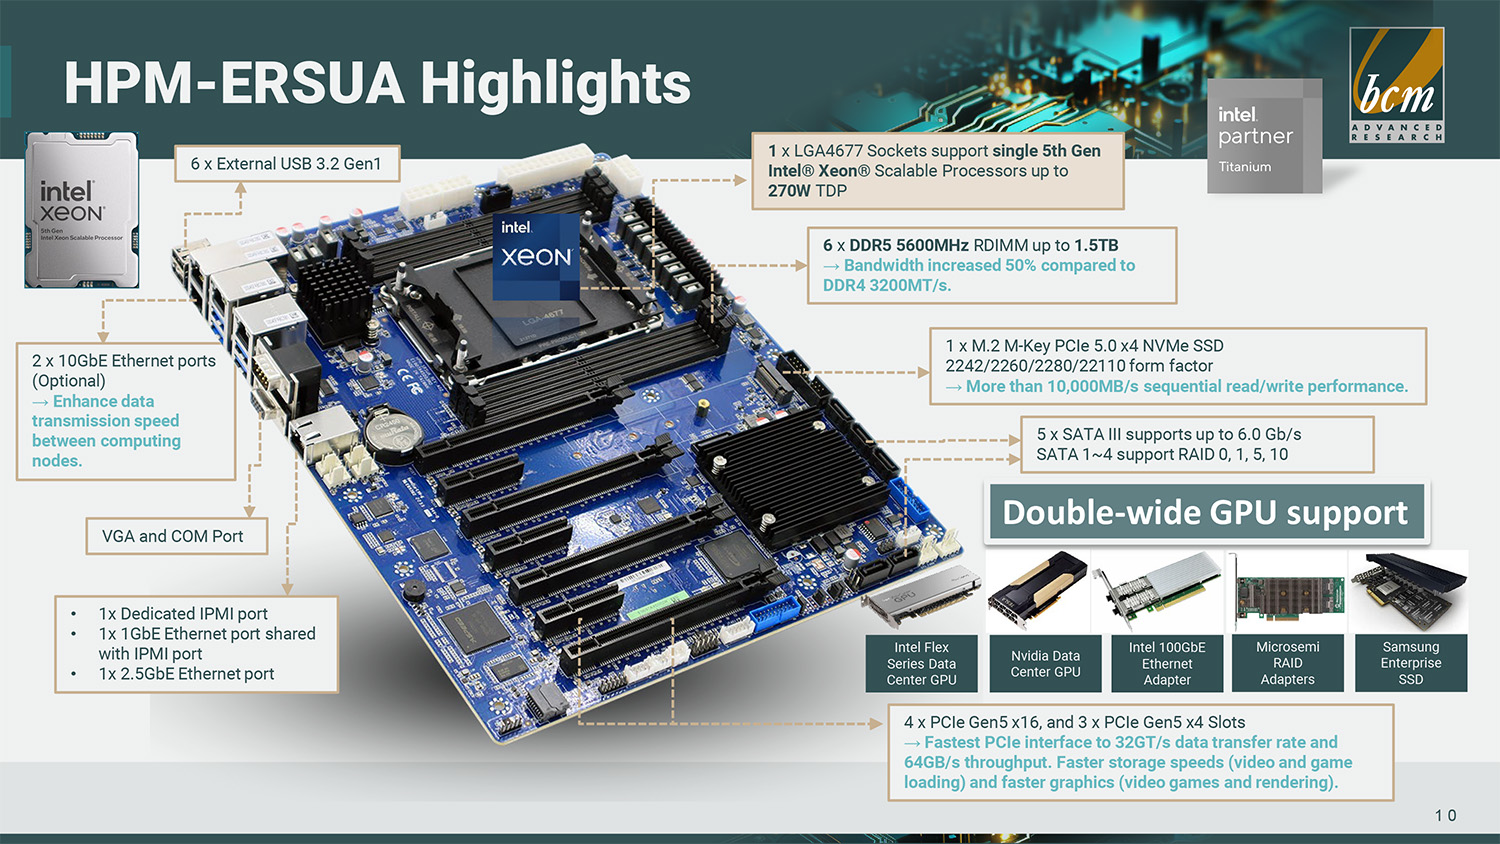 HPM-ERSUA supports 5th Gen Intel Xeon Processors